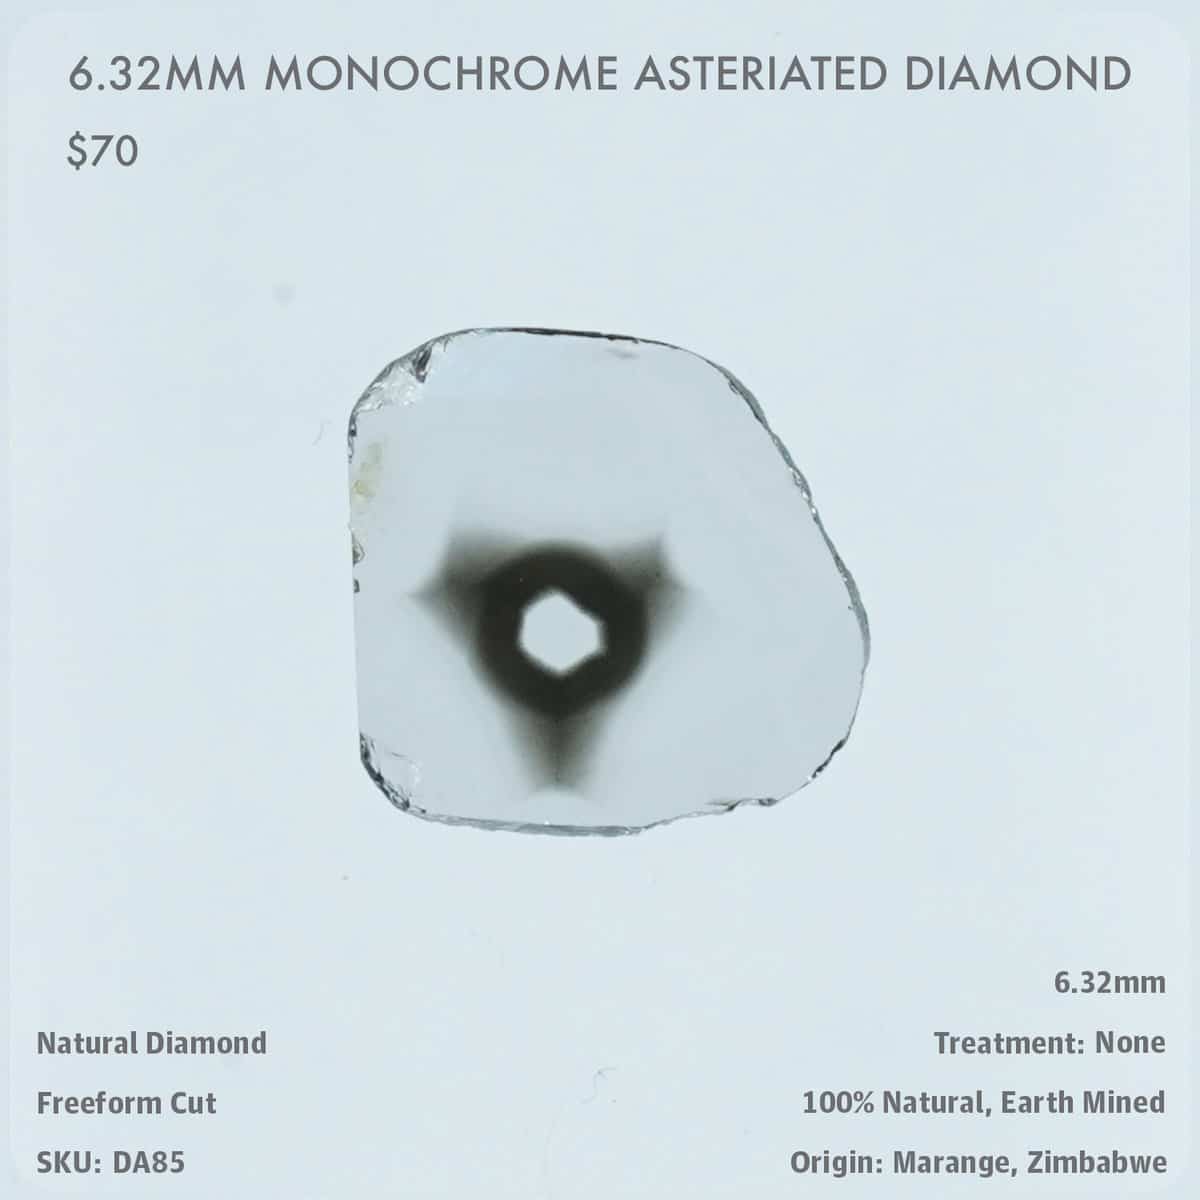 6.32mm Monochrome Asteriated Diamond